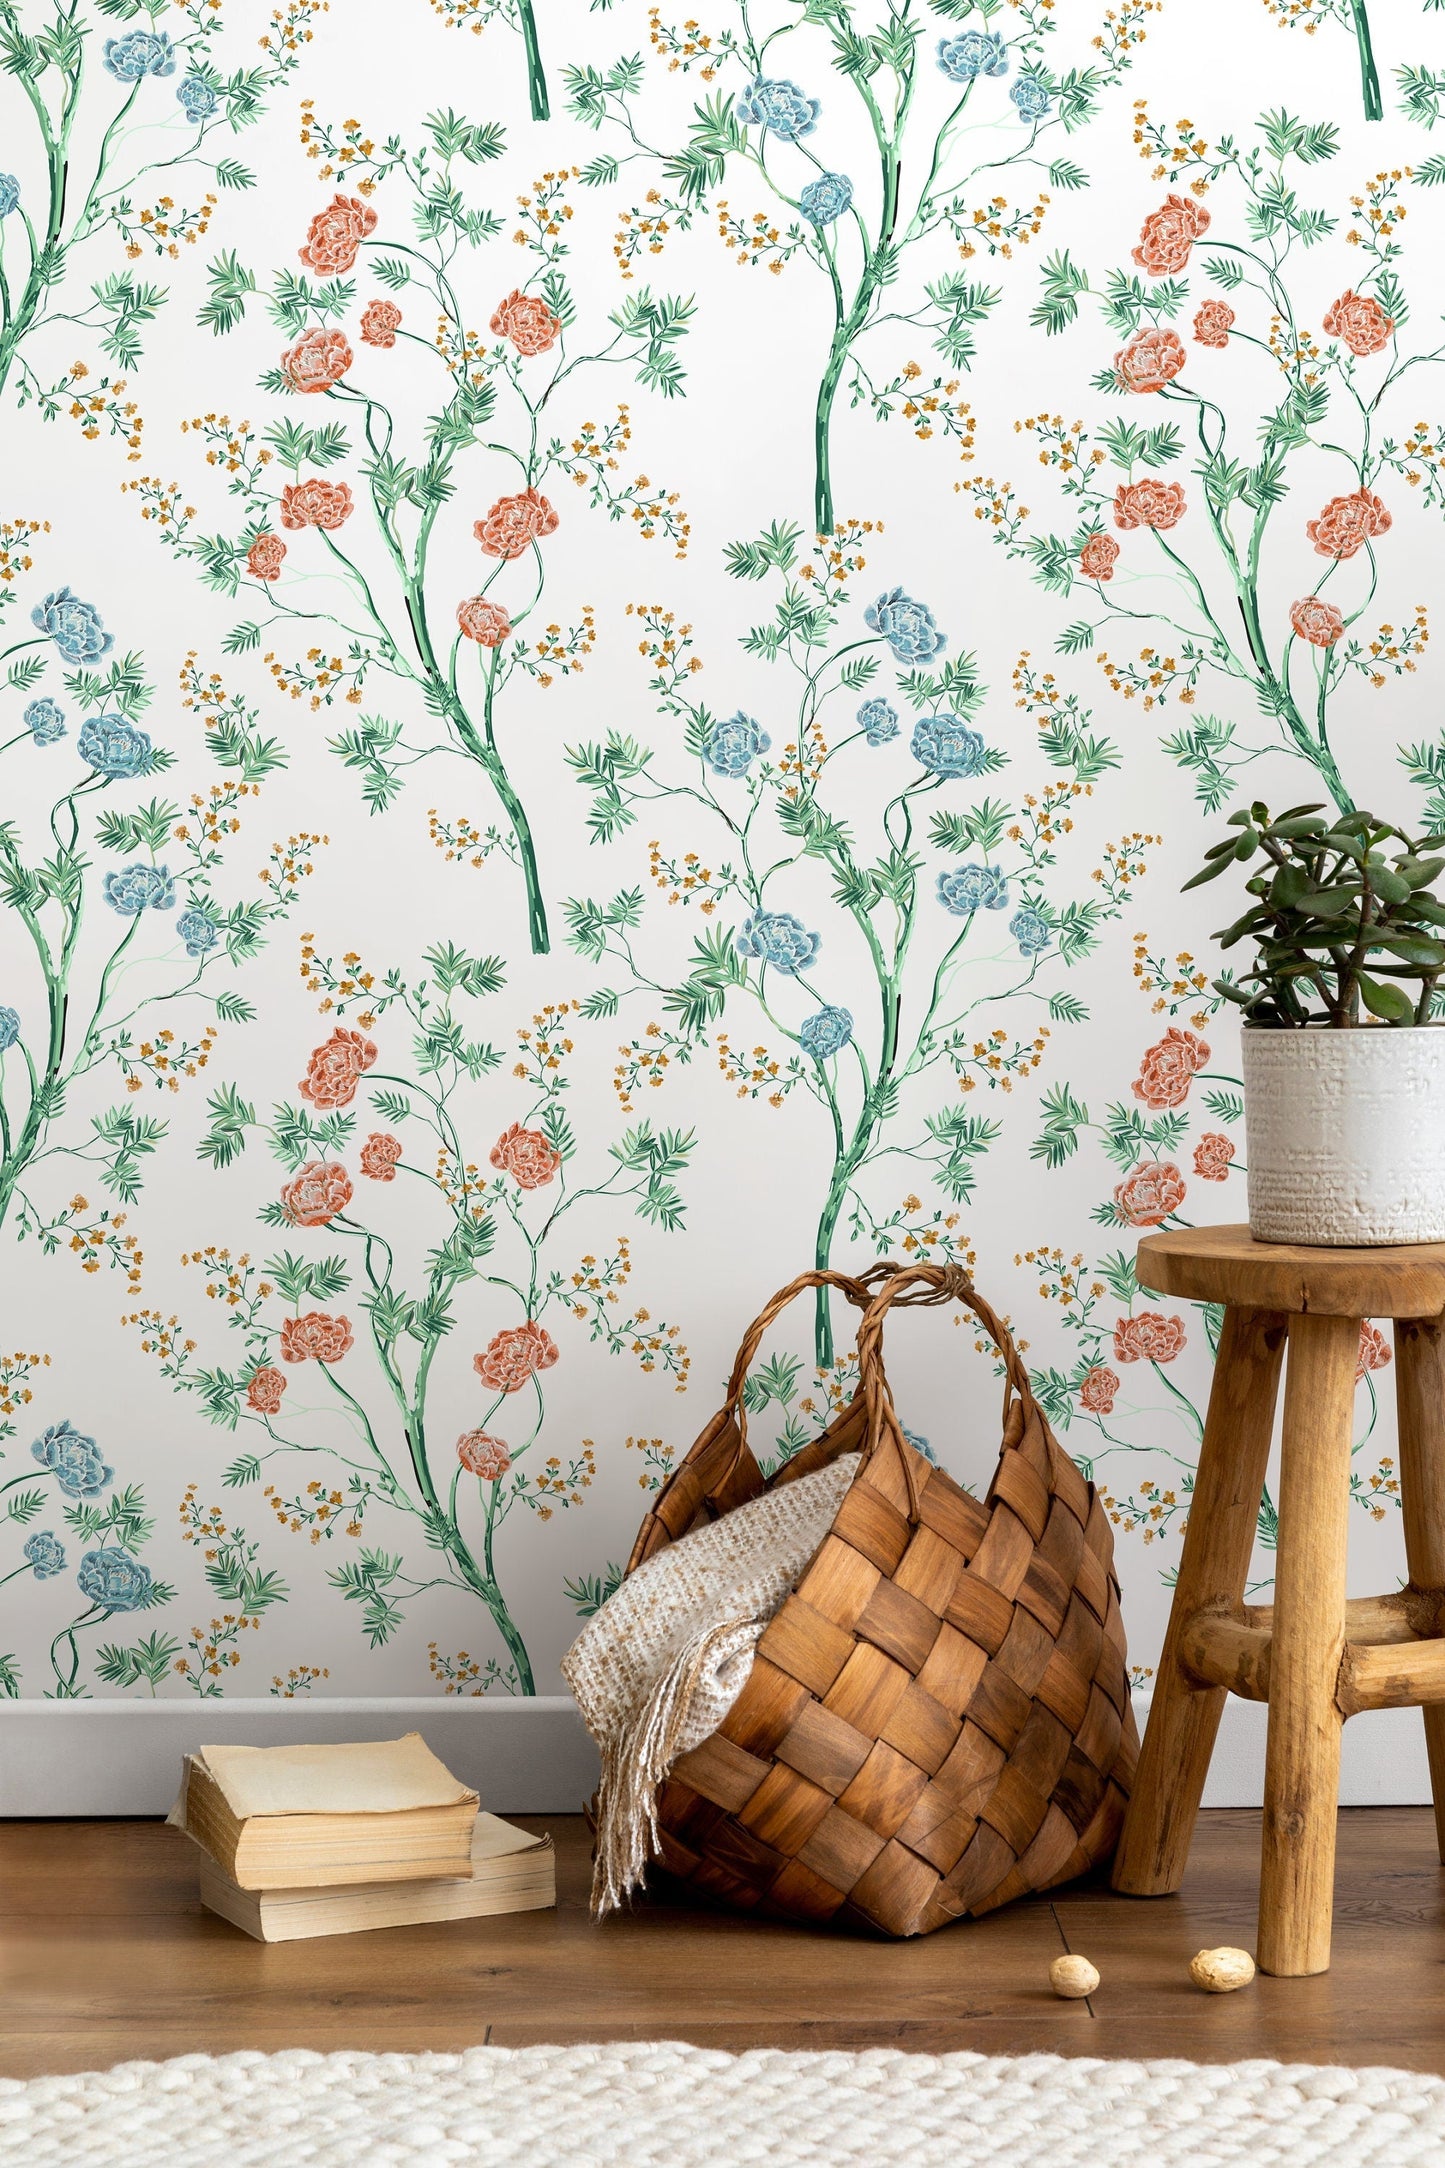 Boho Floral Garden Wallpaper / Peel and Stick Wallpaper Removable Wallpaper Home Decor Wall Art Wall Decor Room Decor - D121